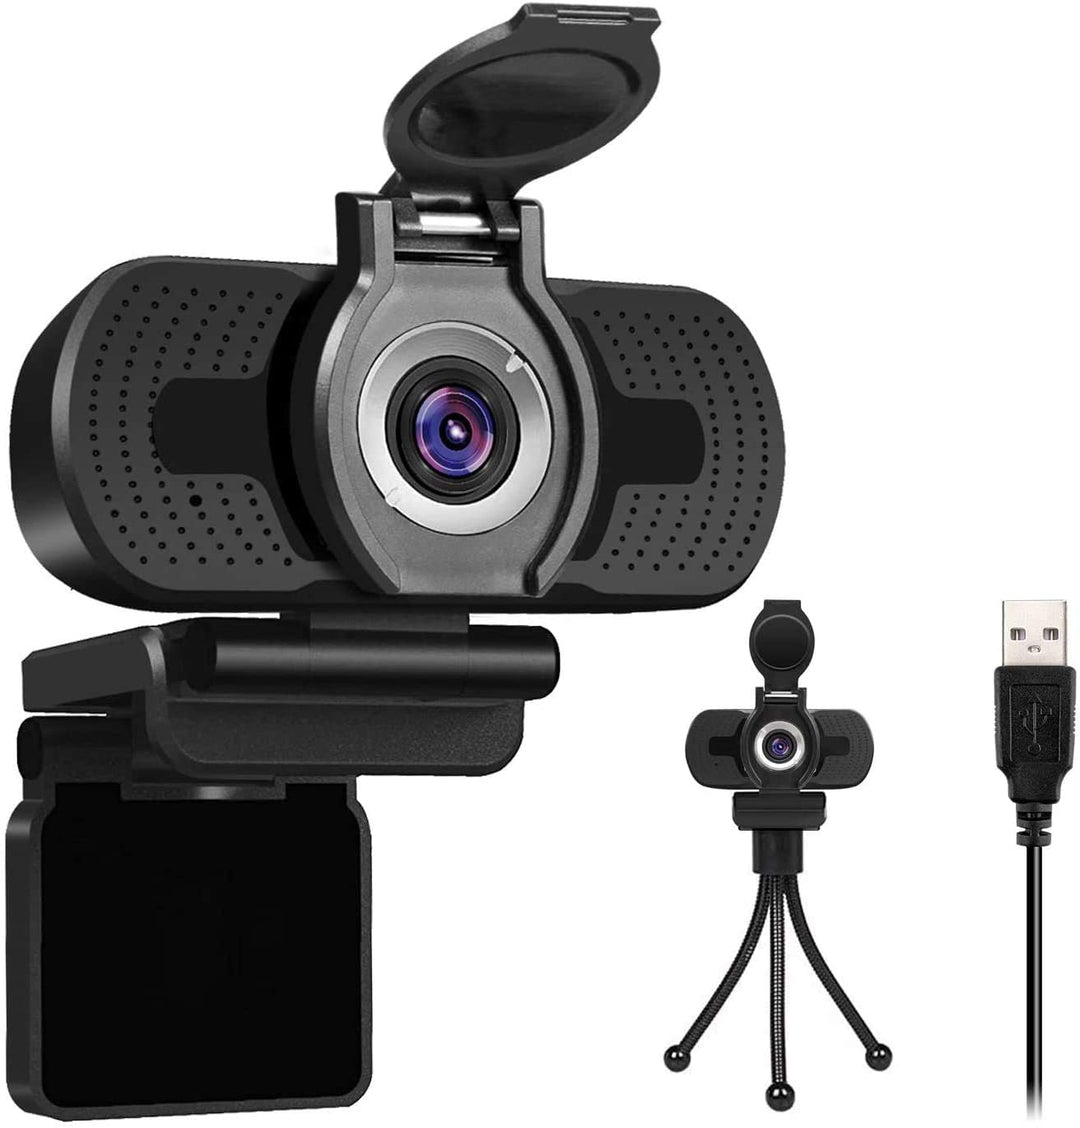 1080p Full Hd Webcam With Webcam Cover W2 Larmtek